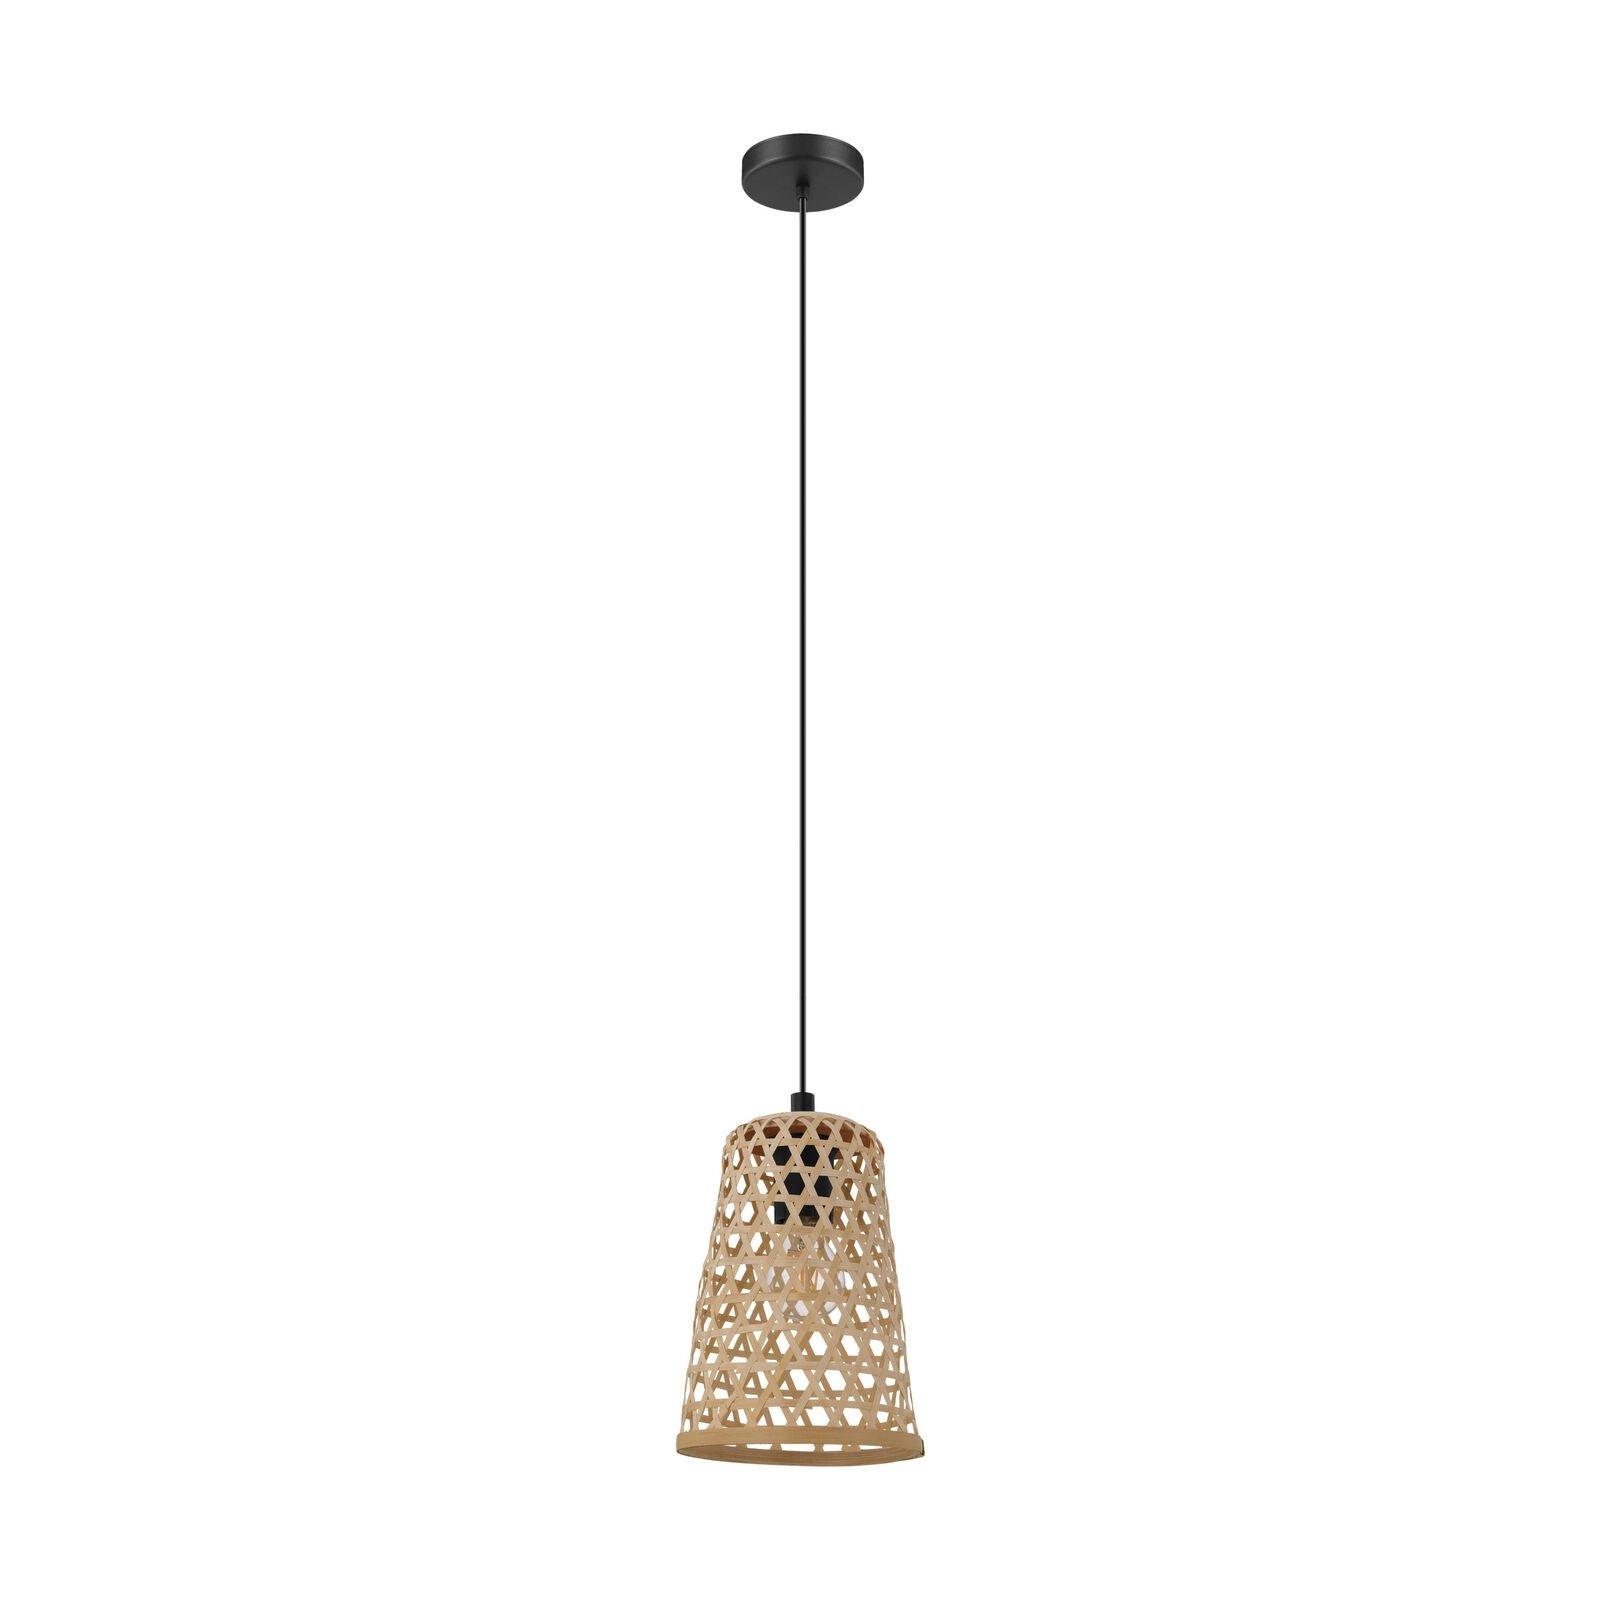 Hanging Ceiling Pendant Light Black & Wicker 1 x 40W E27 Hallway Feature Lamp